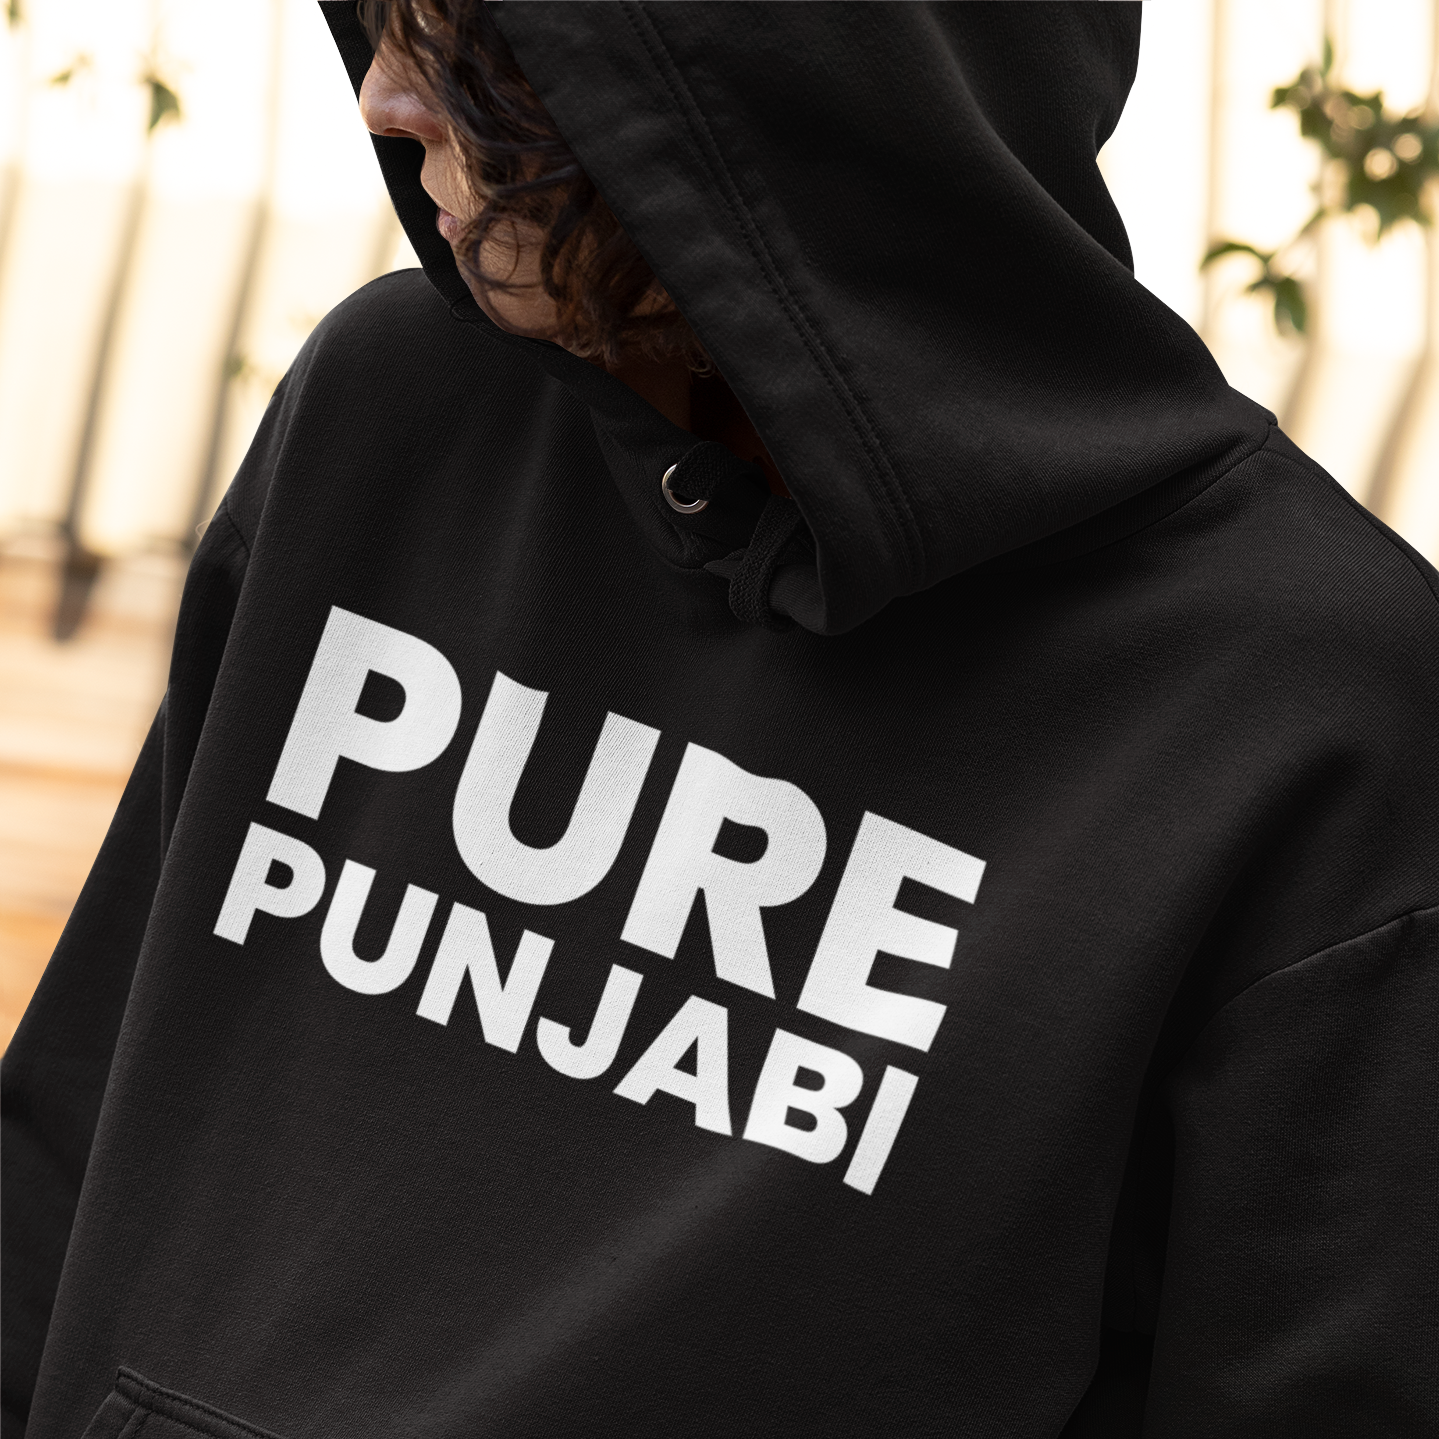 
                  
                    Pure Punjabi Unisex Hoodie - Various Colours
                  
                